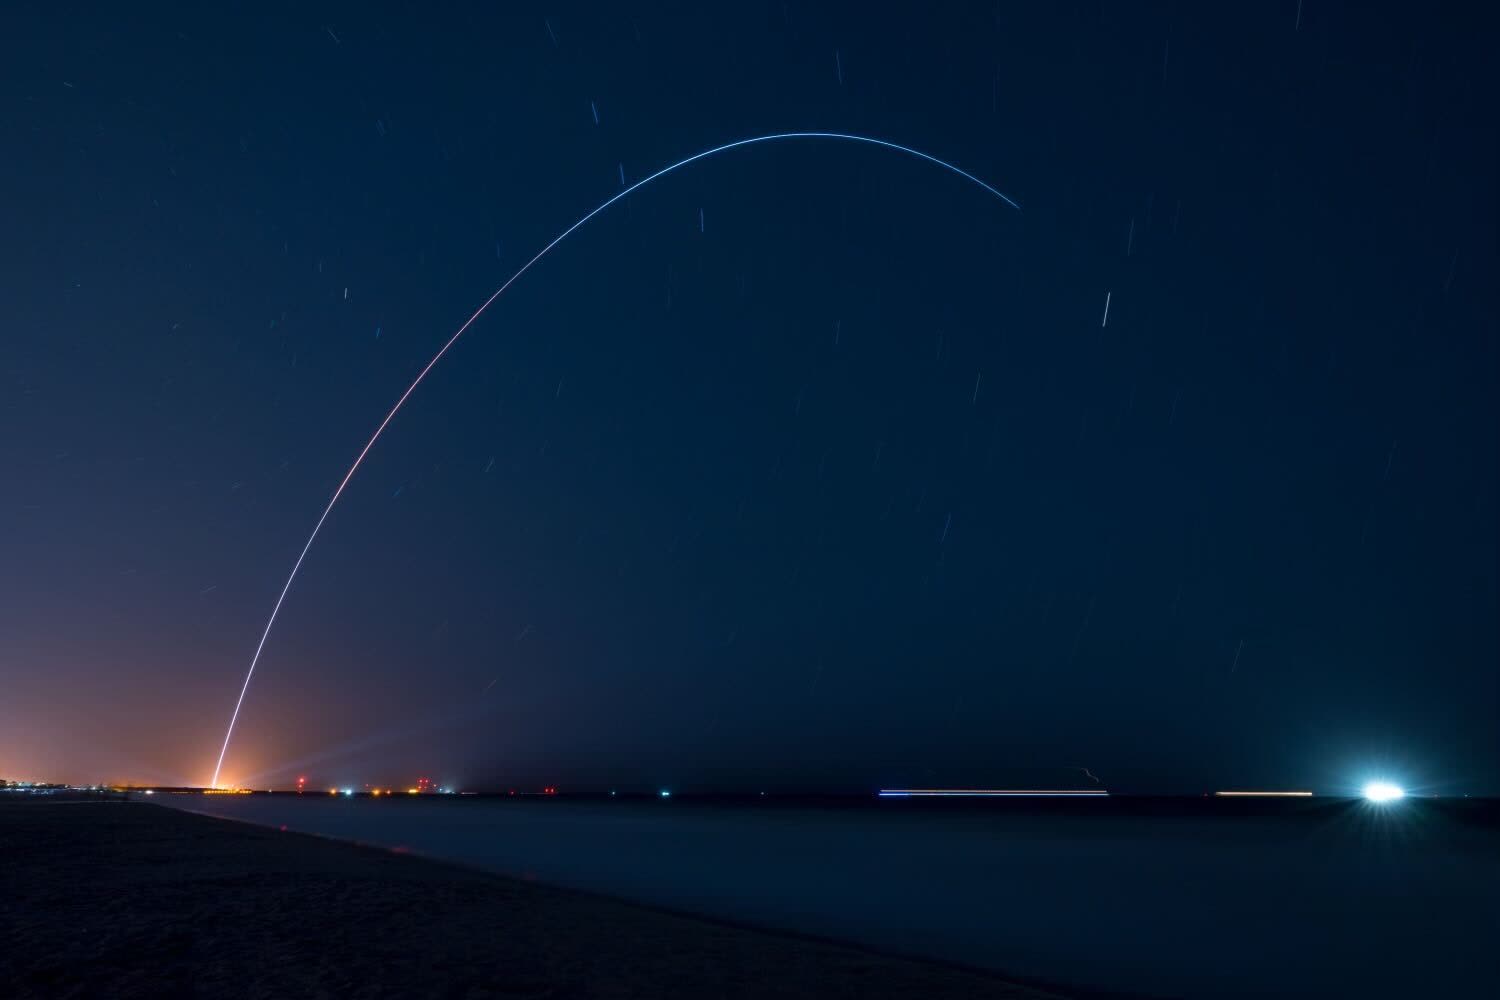 Relativity's 3D printed rocket achieves multiple milestones but fails to reach orbit